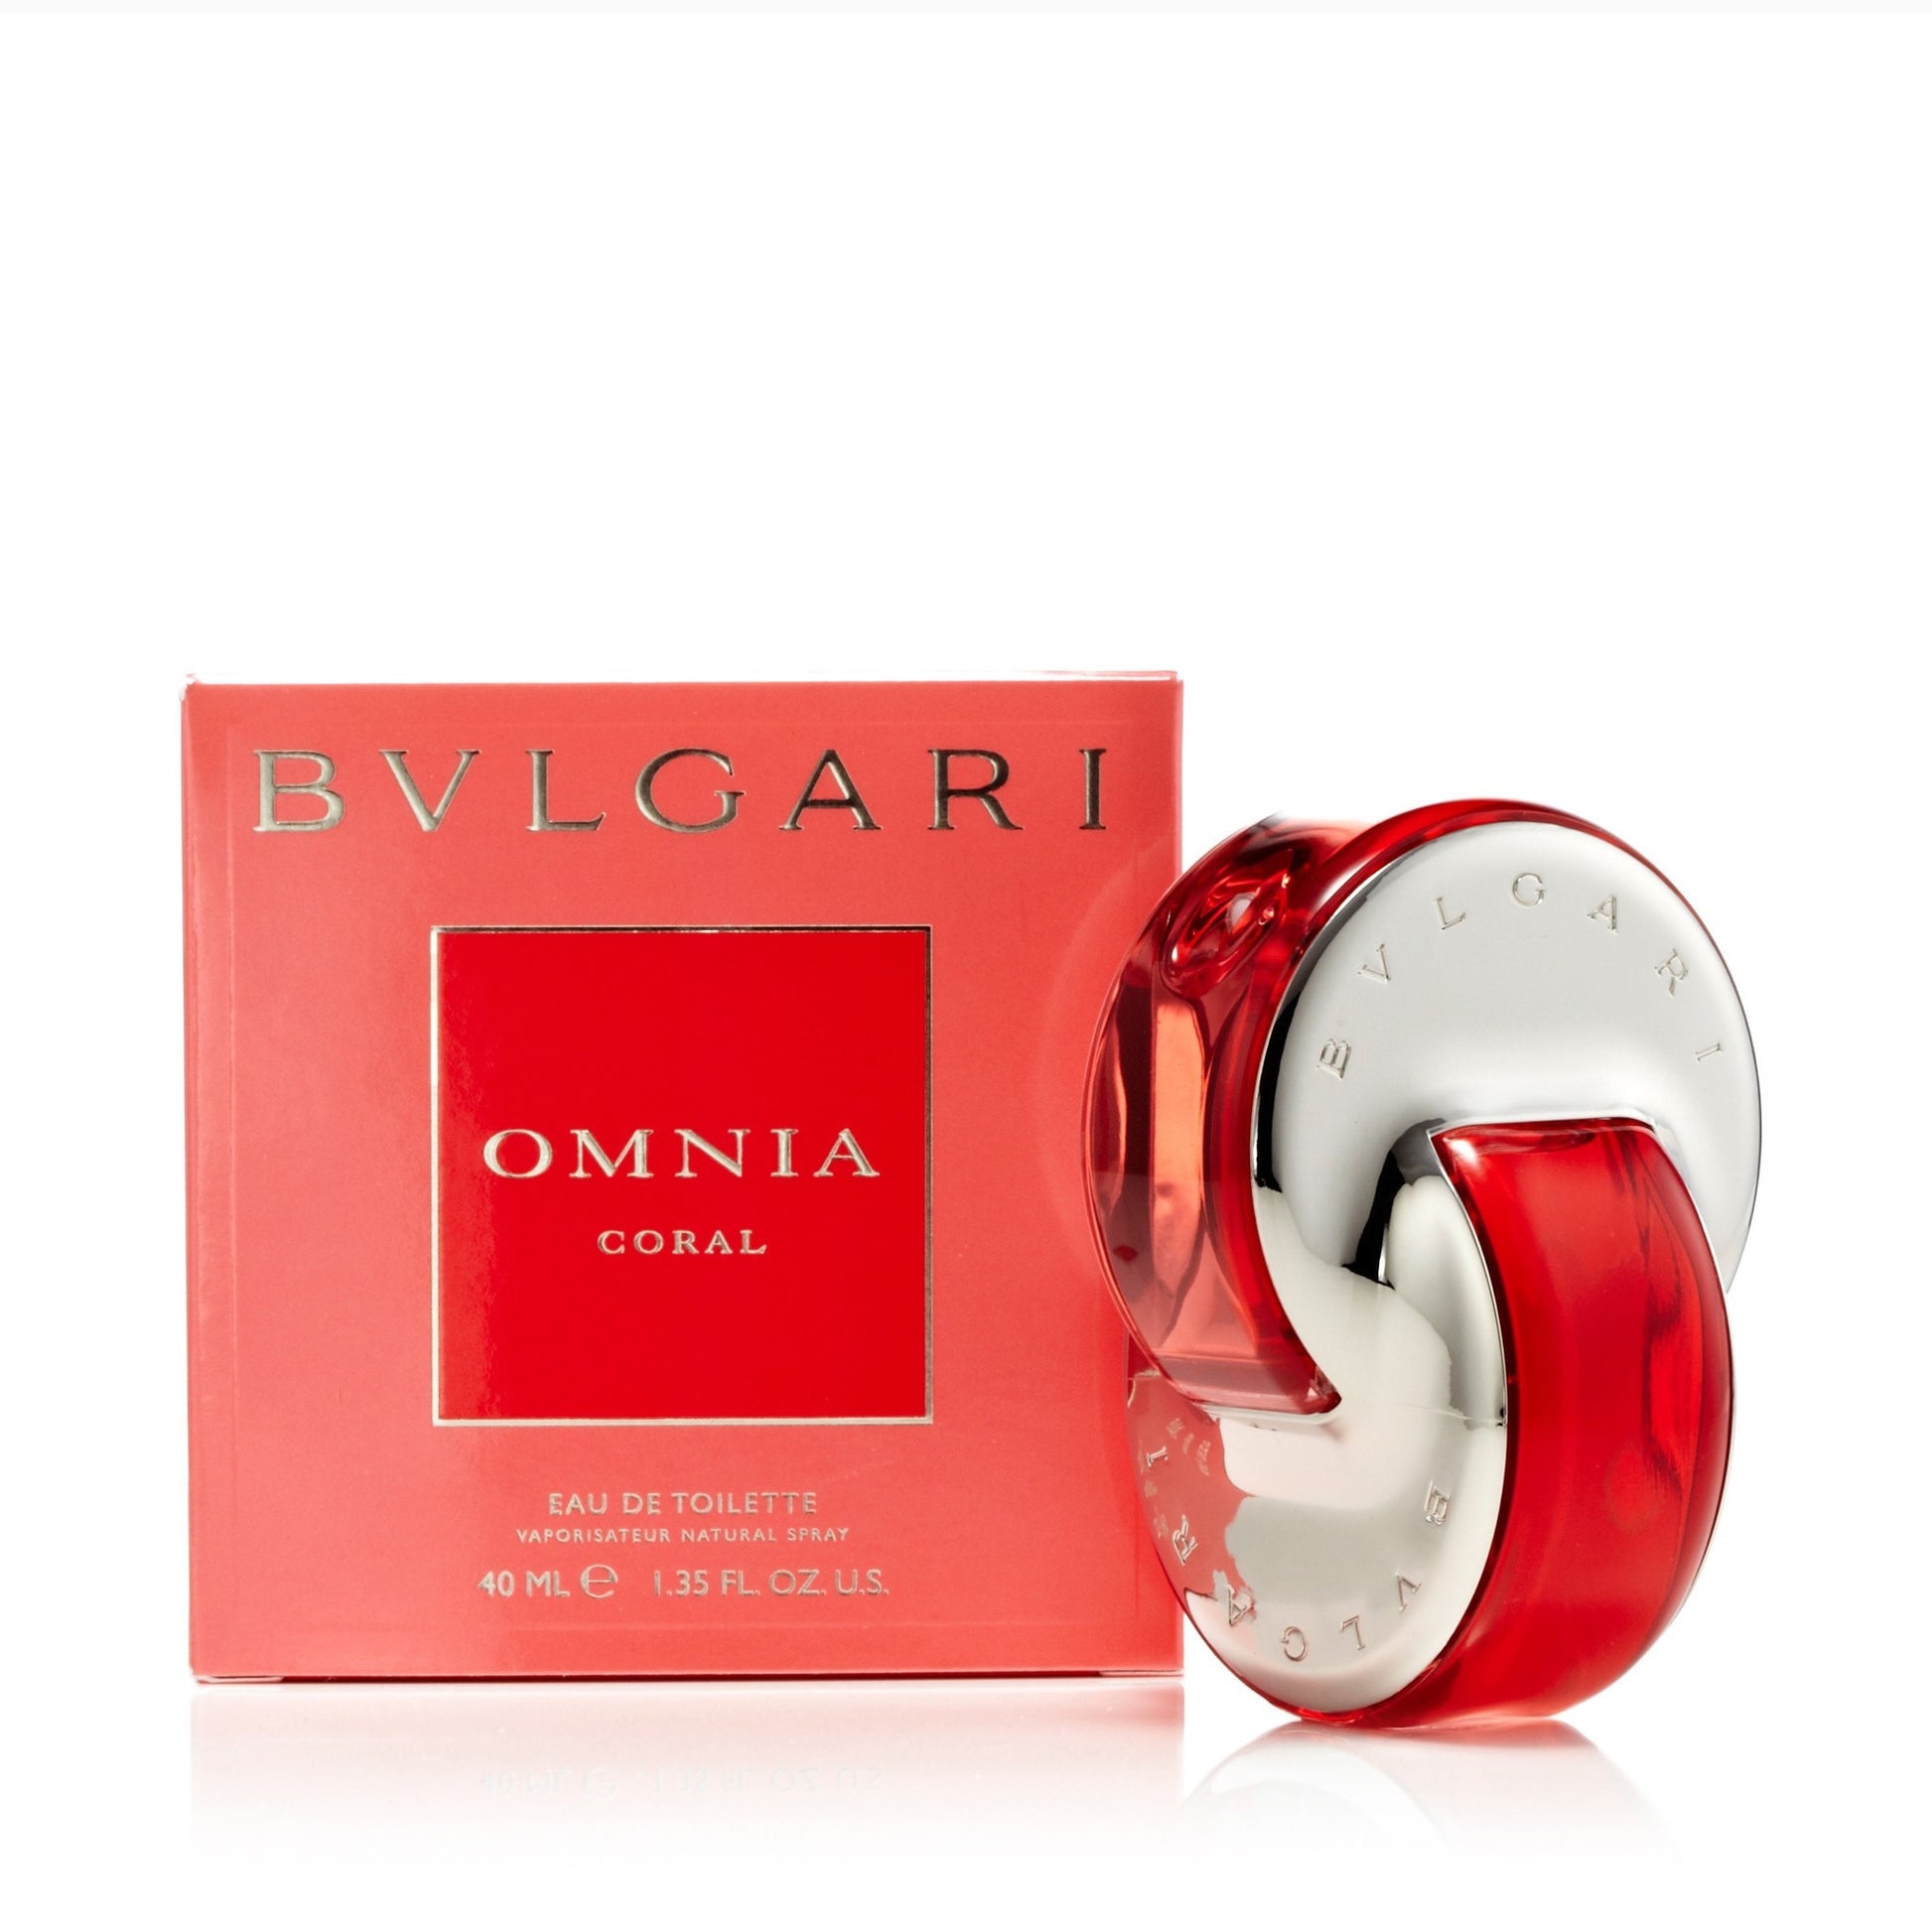 Omnia Coral Eau de Toilette Spray for Women by Bvlgari 1.3 oz. Click to open in modal